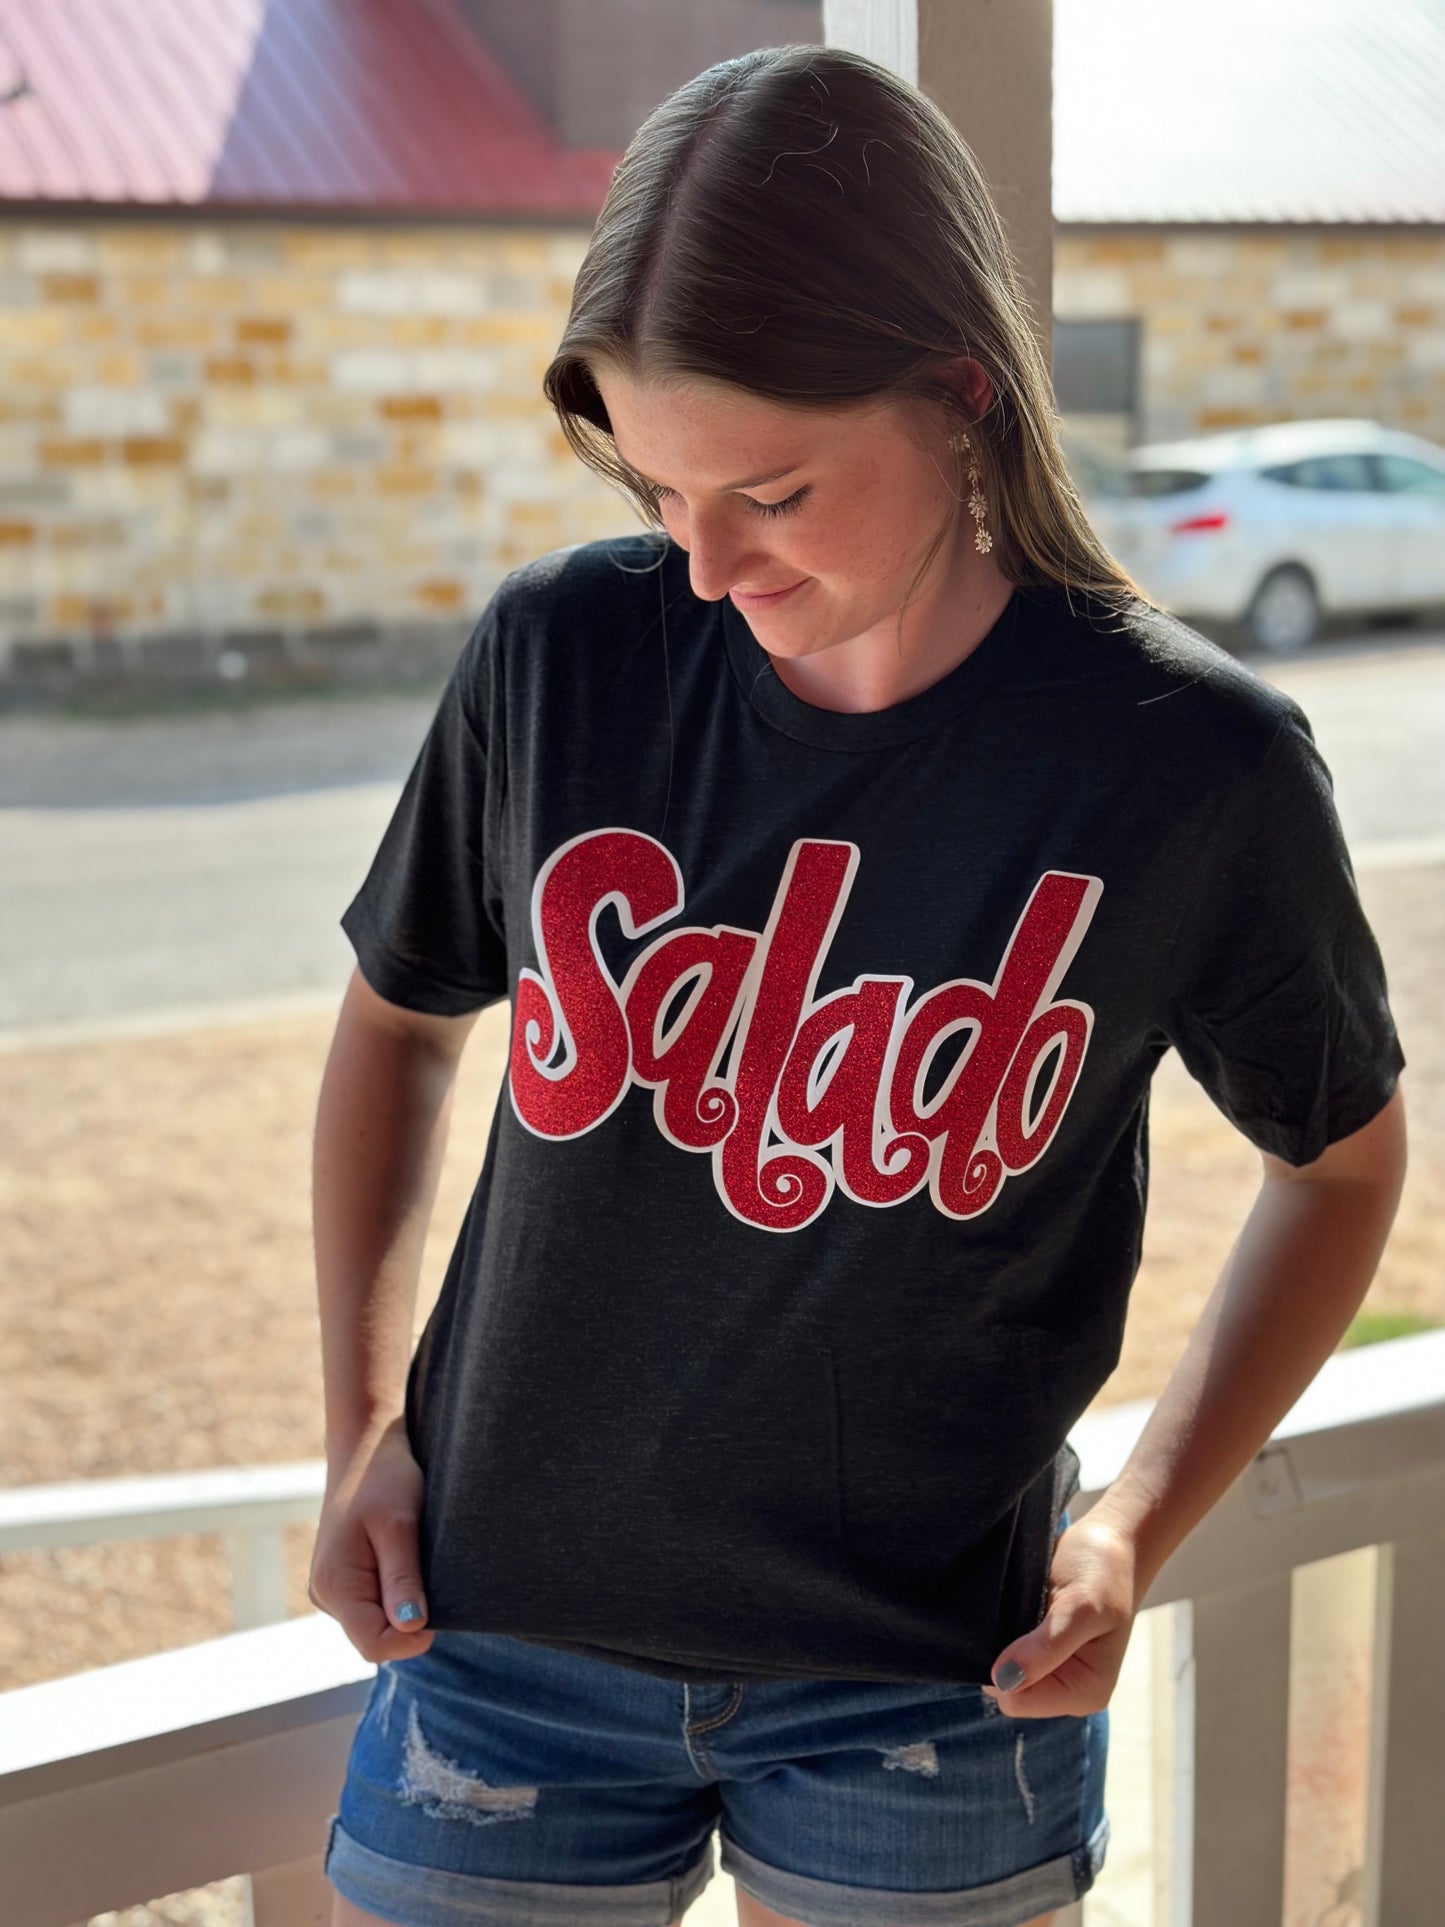 Salado T-Shirt Black w/red letters